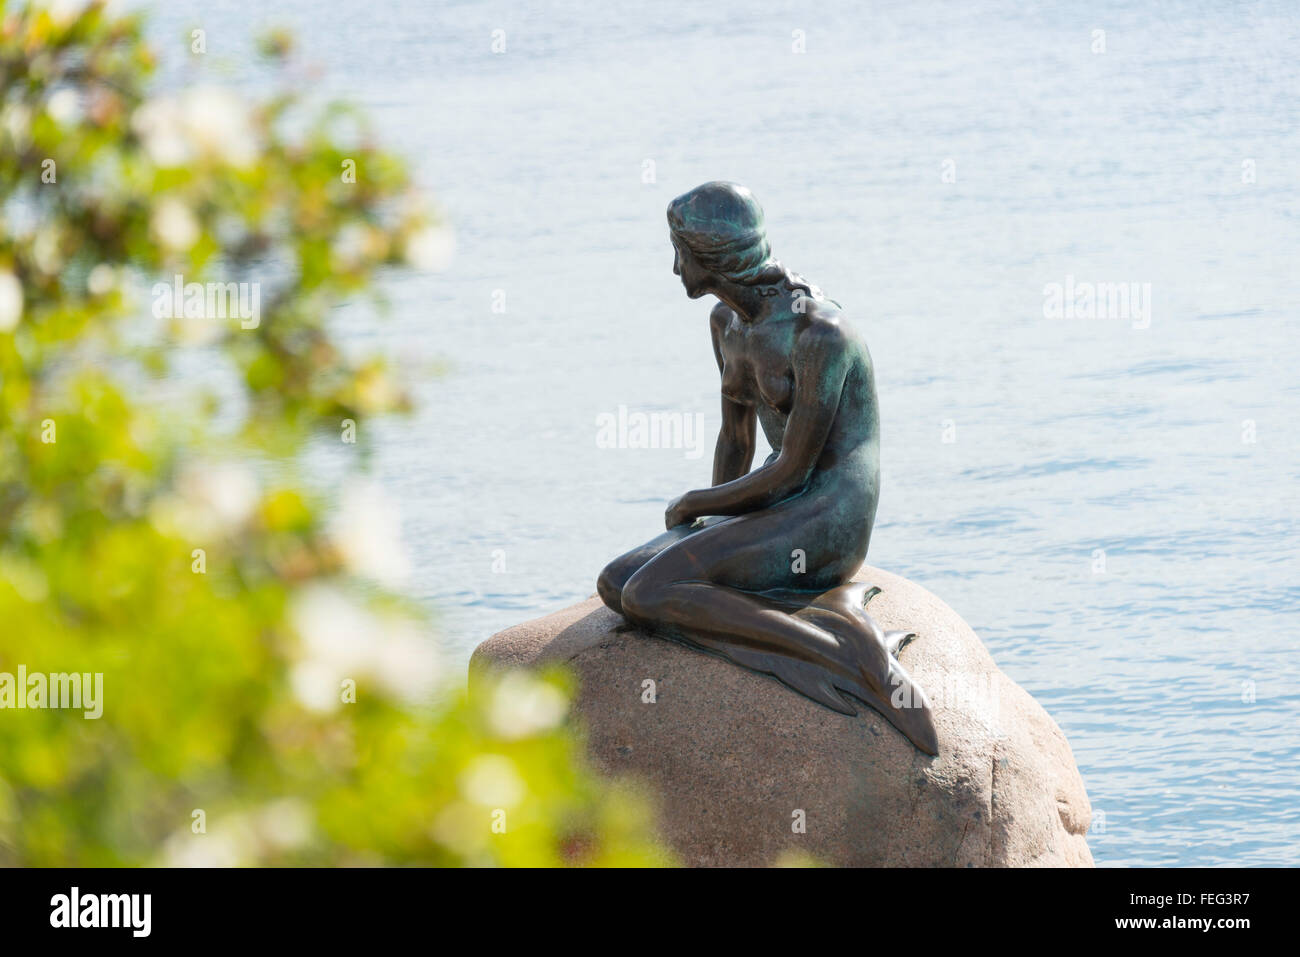 La statua della Sirenetta (Den Lille Havfrue), Langelinie, Copenaghen (Kobenhavn), Regno di Danimarca Foto Stock